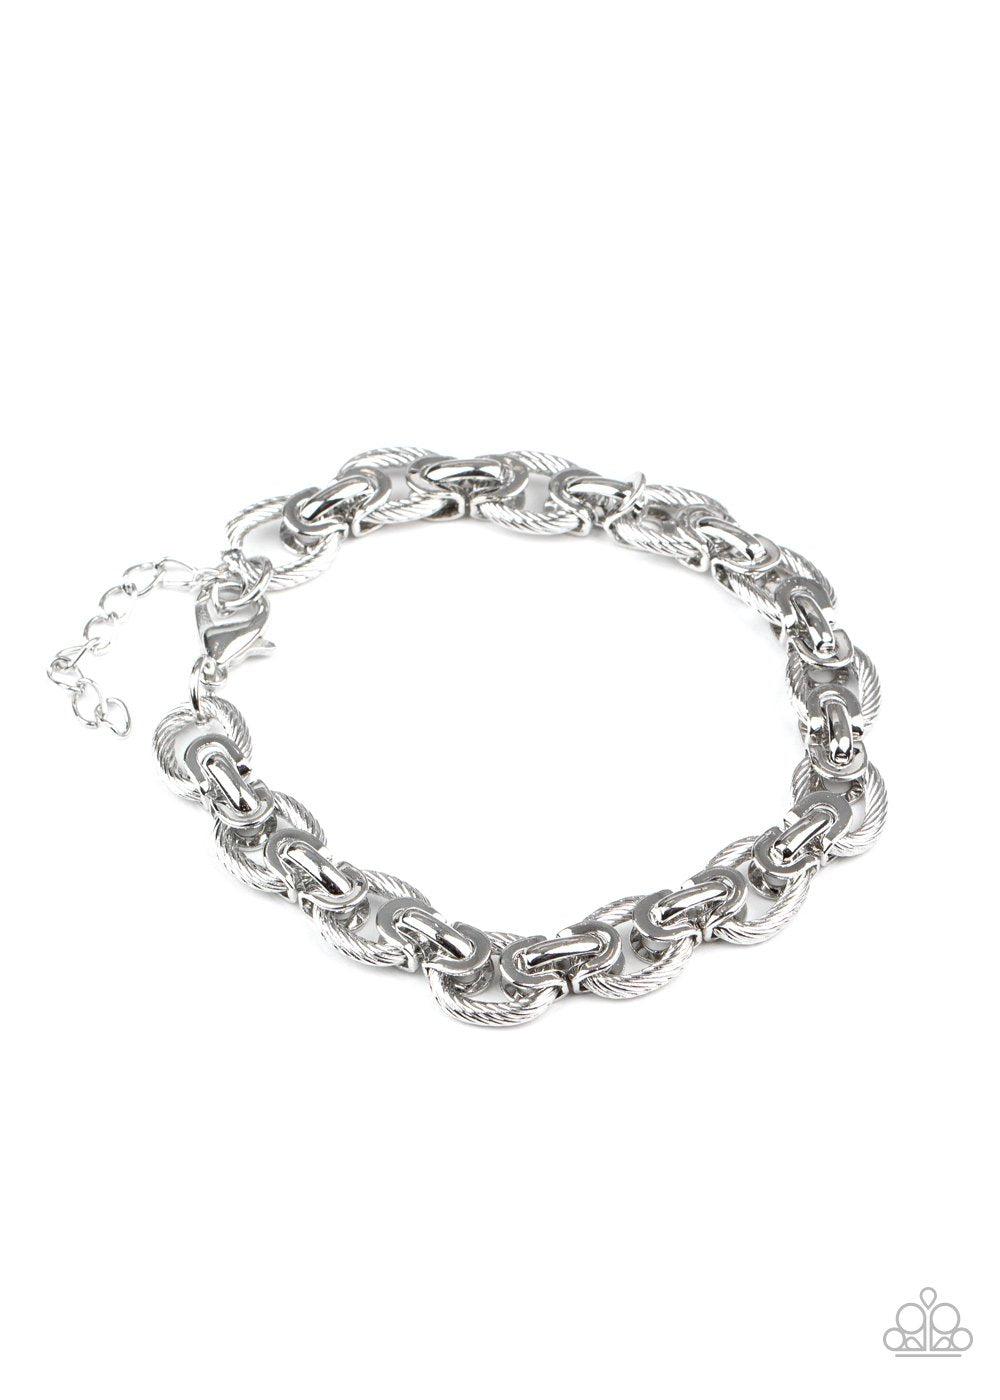 Gridiron Grunge Men's Silver Bracelet - Paparazzi Accessories-CarasShop.com - $5 Jewelry by Cara Jewels